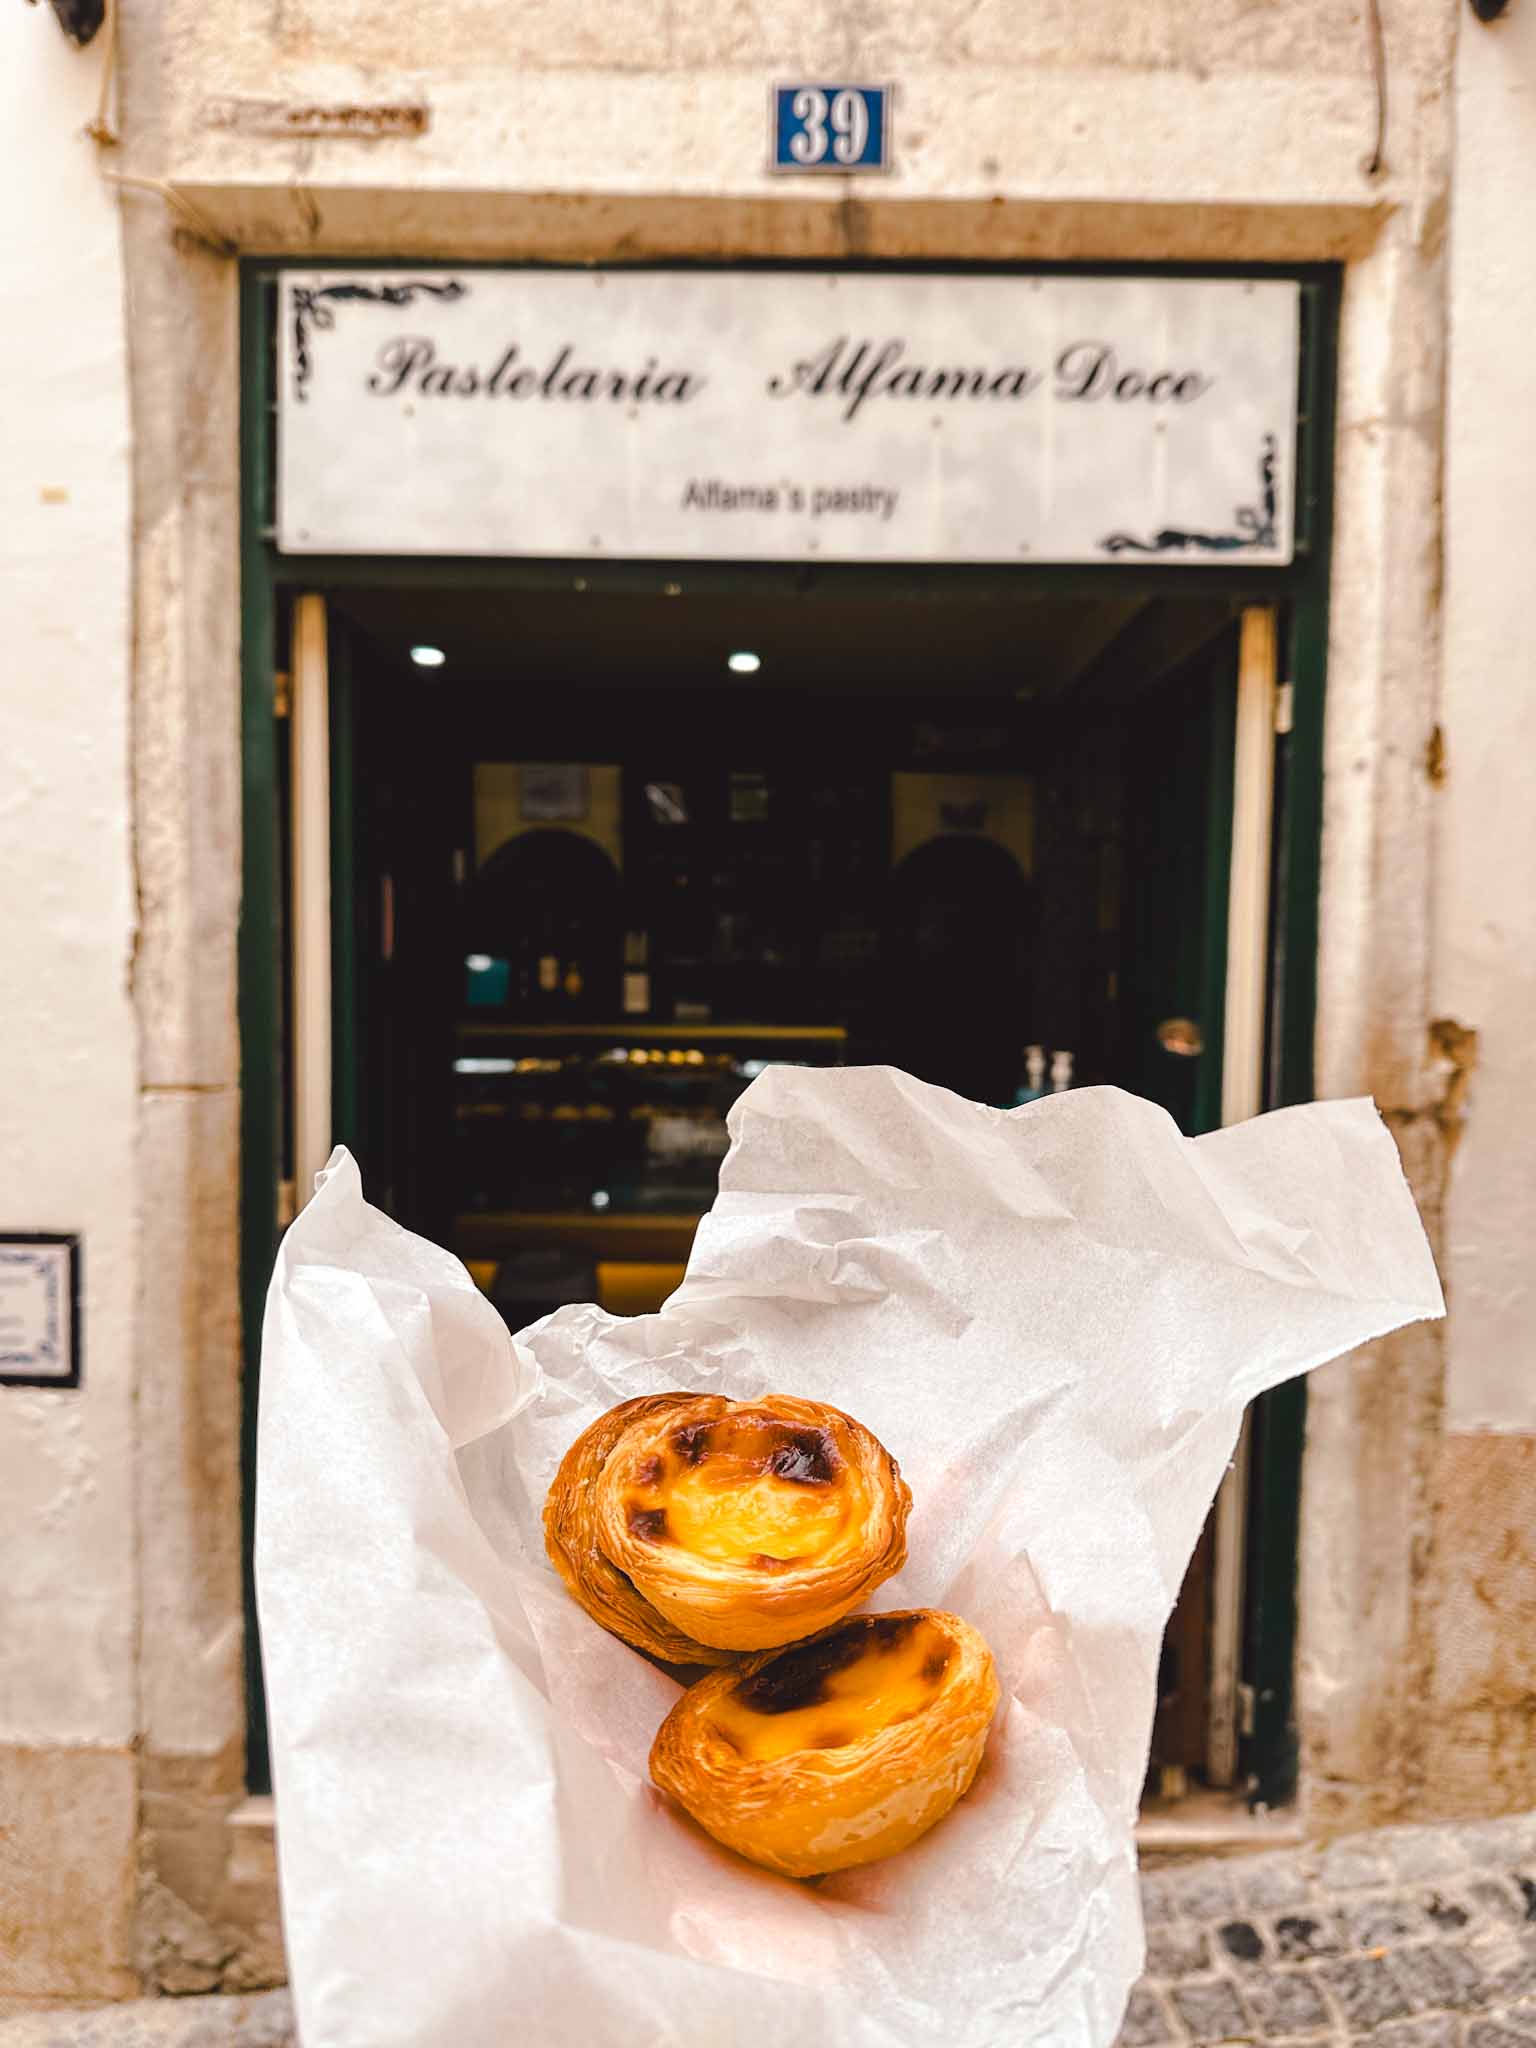 Best pastel de nata in Lisbon, Portugal - Alfama Doce